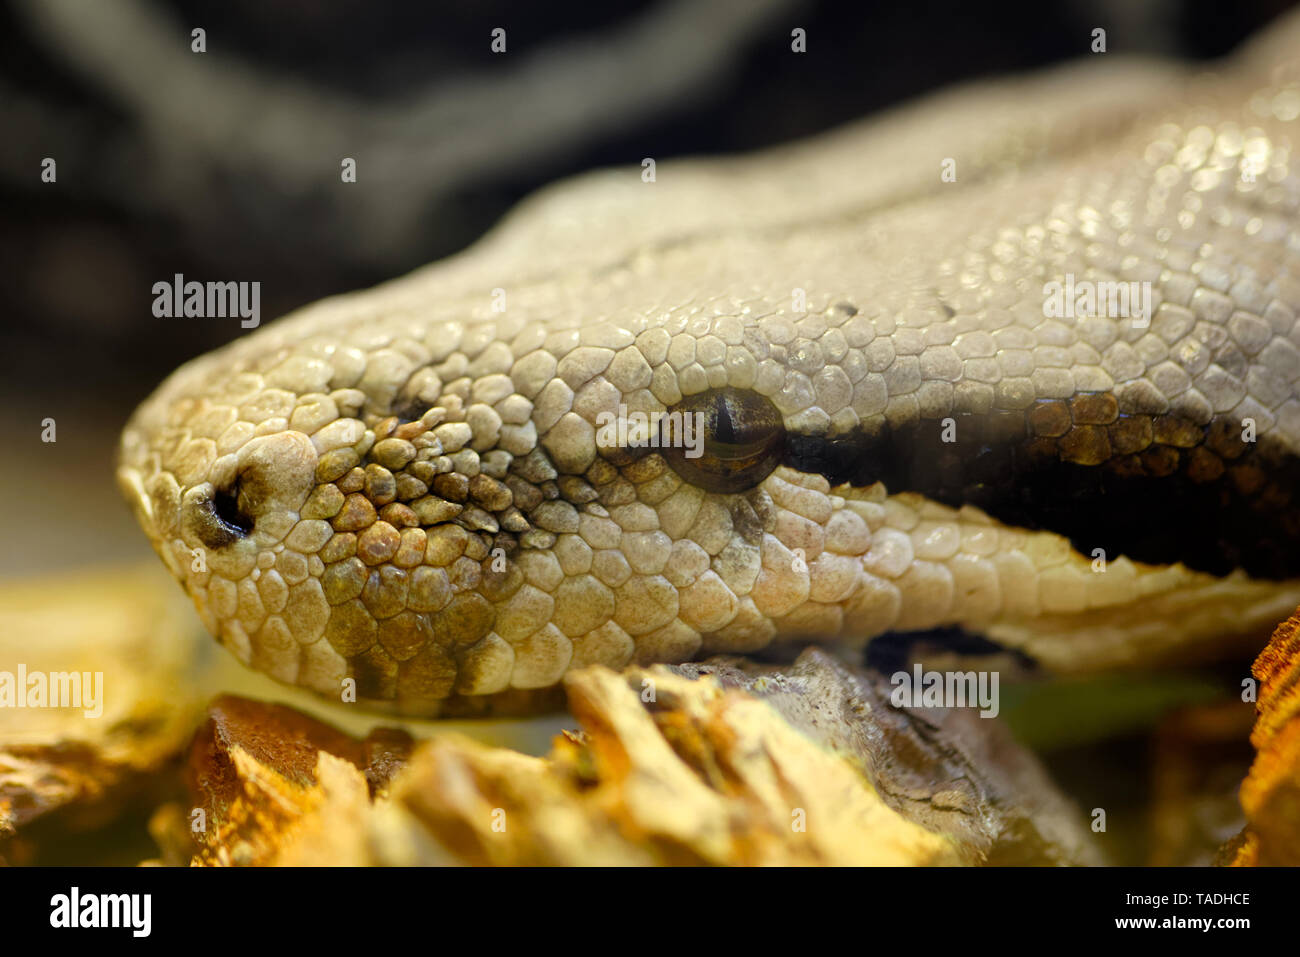 Animals: big snake portrait, close-up shot Stock Photo